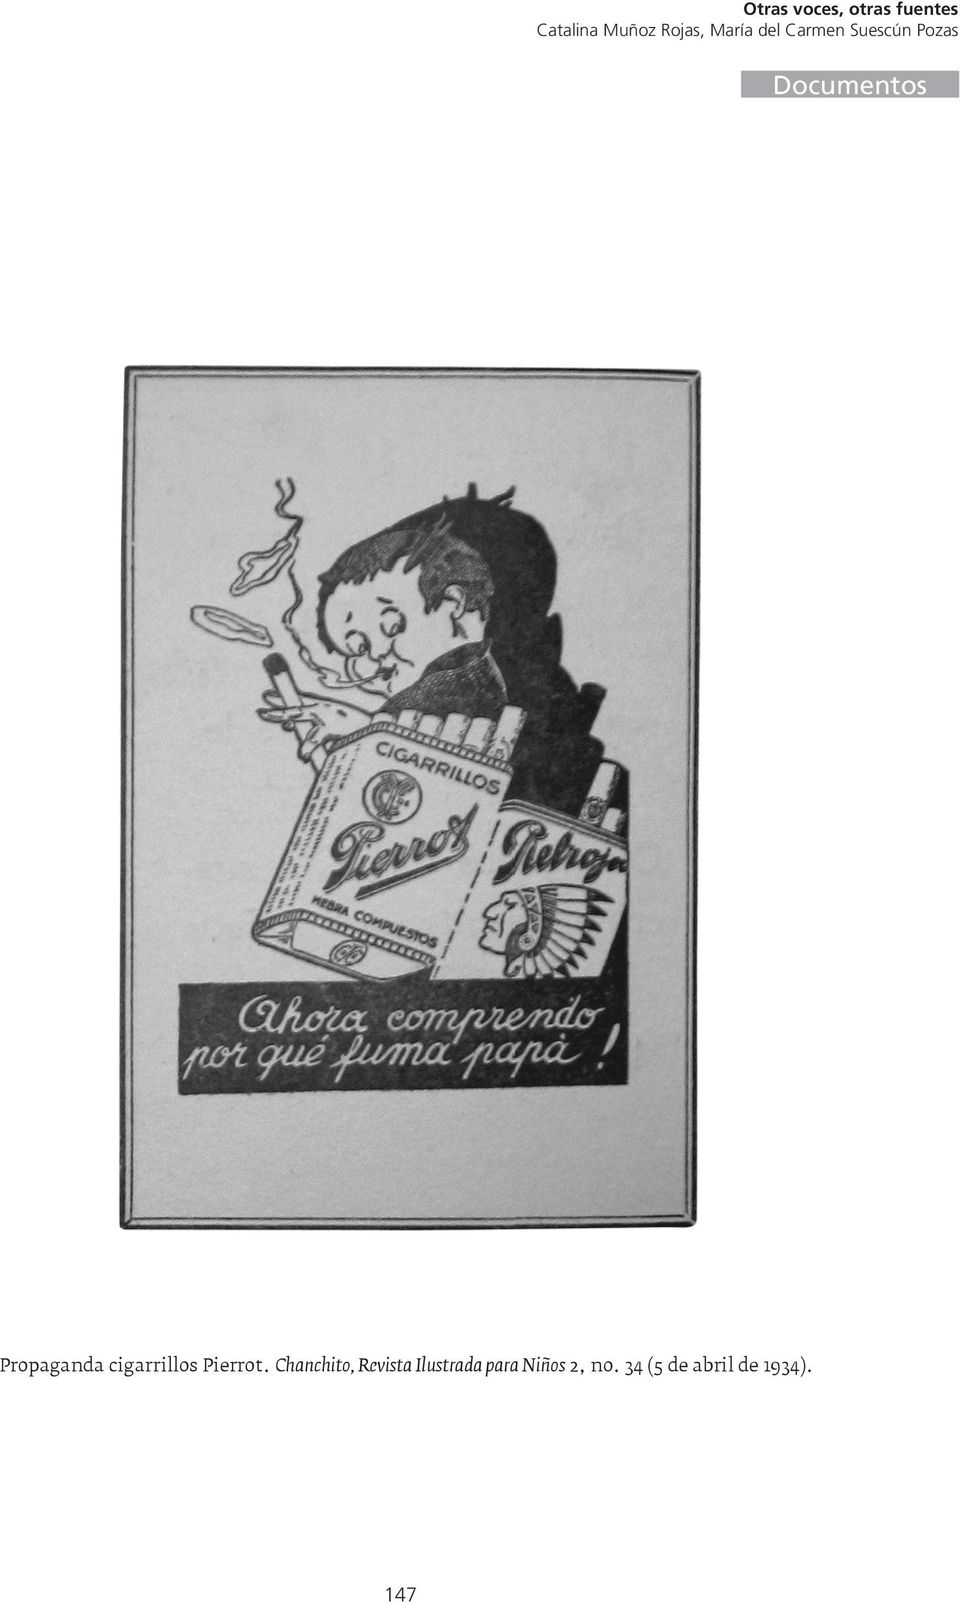 Propaganda cigarrillos Pierrot.